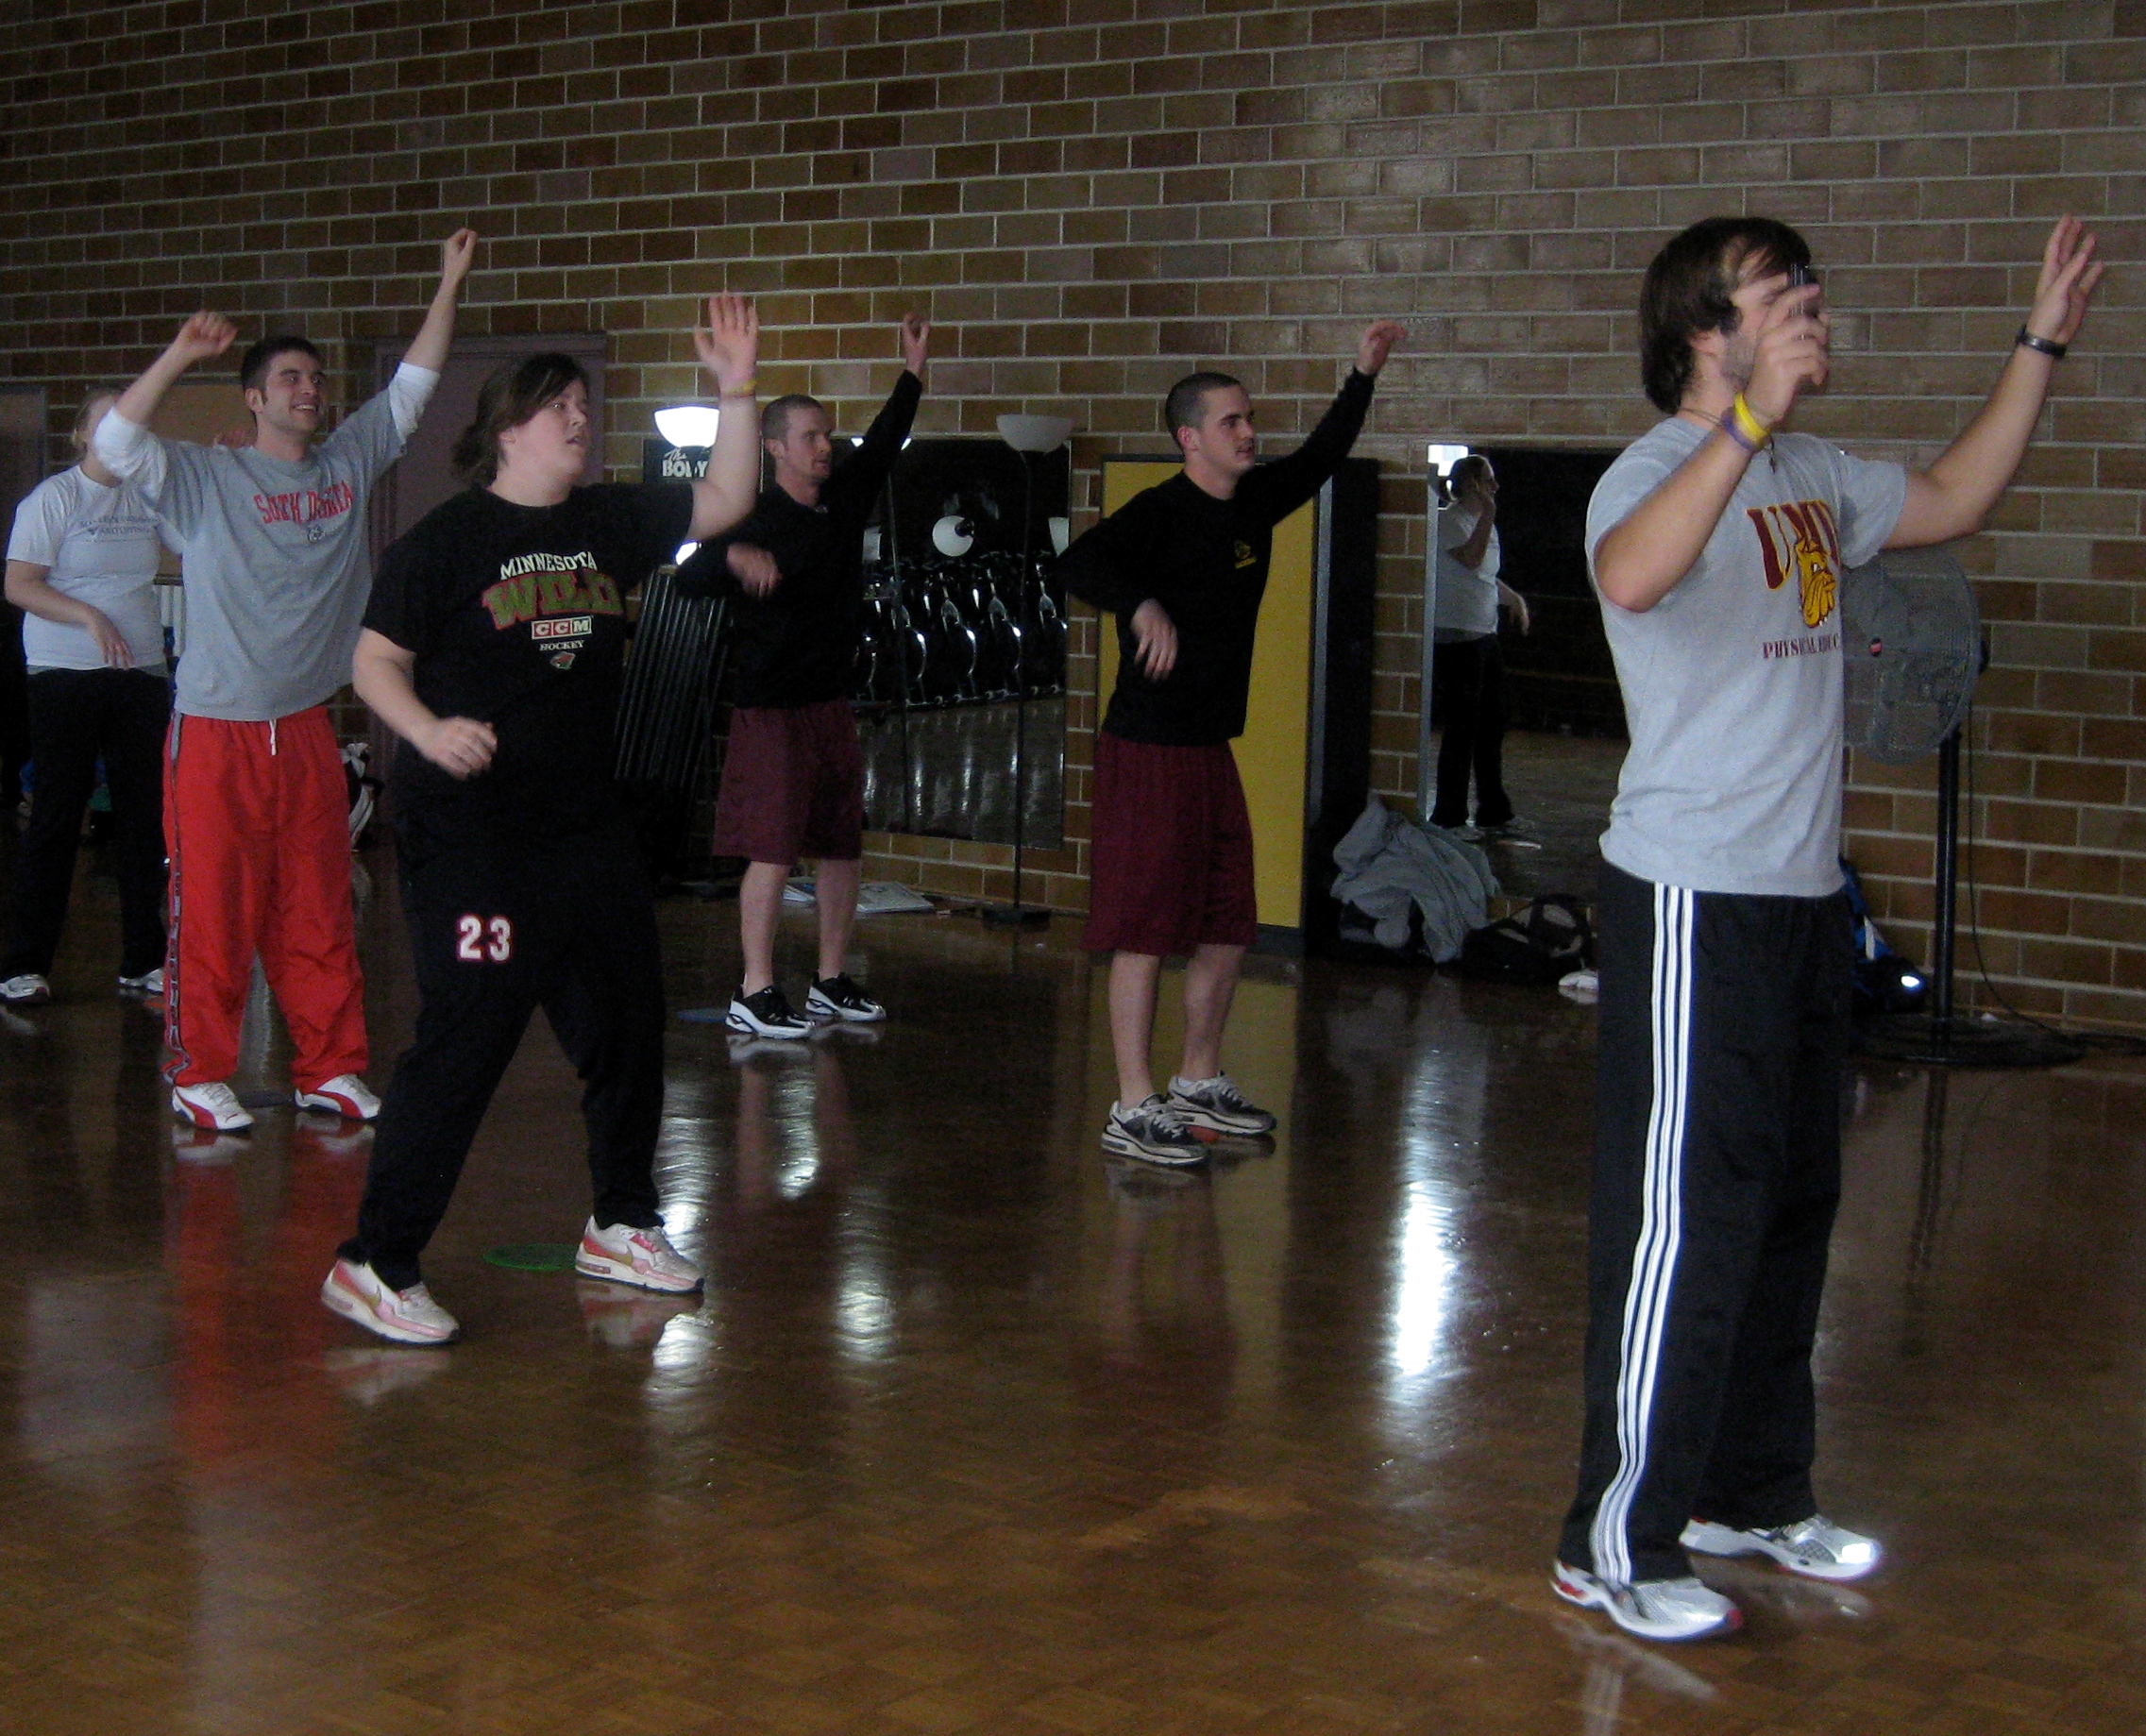 Chris Parno teaches Rak Dan Line Dancing to his fellow classmates at University of Minnesota-Duluth.